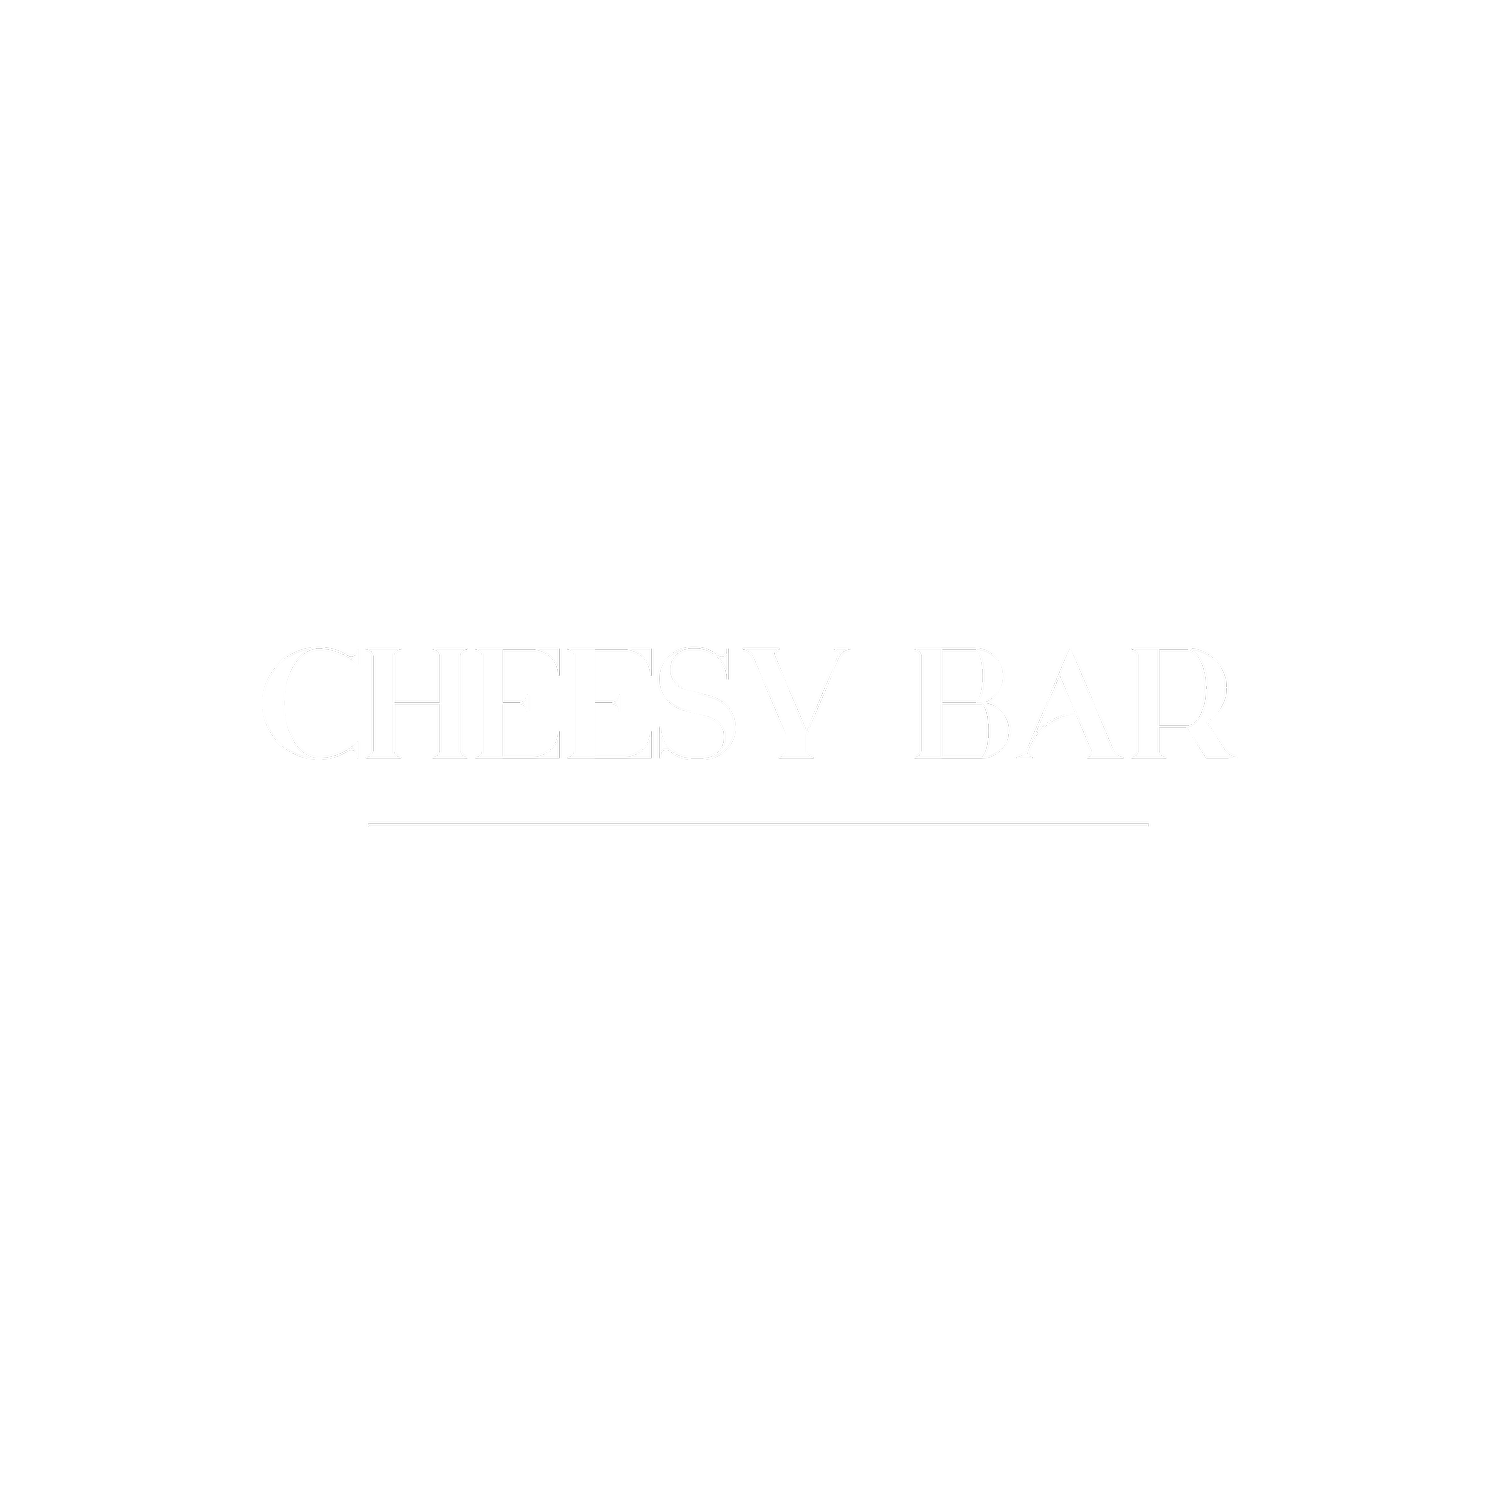 Cheesy Bar